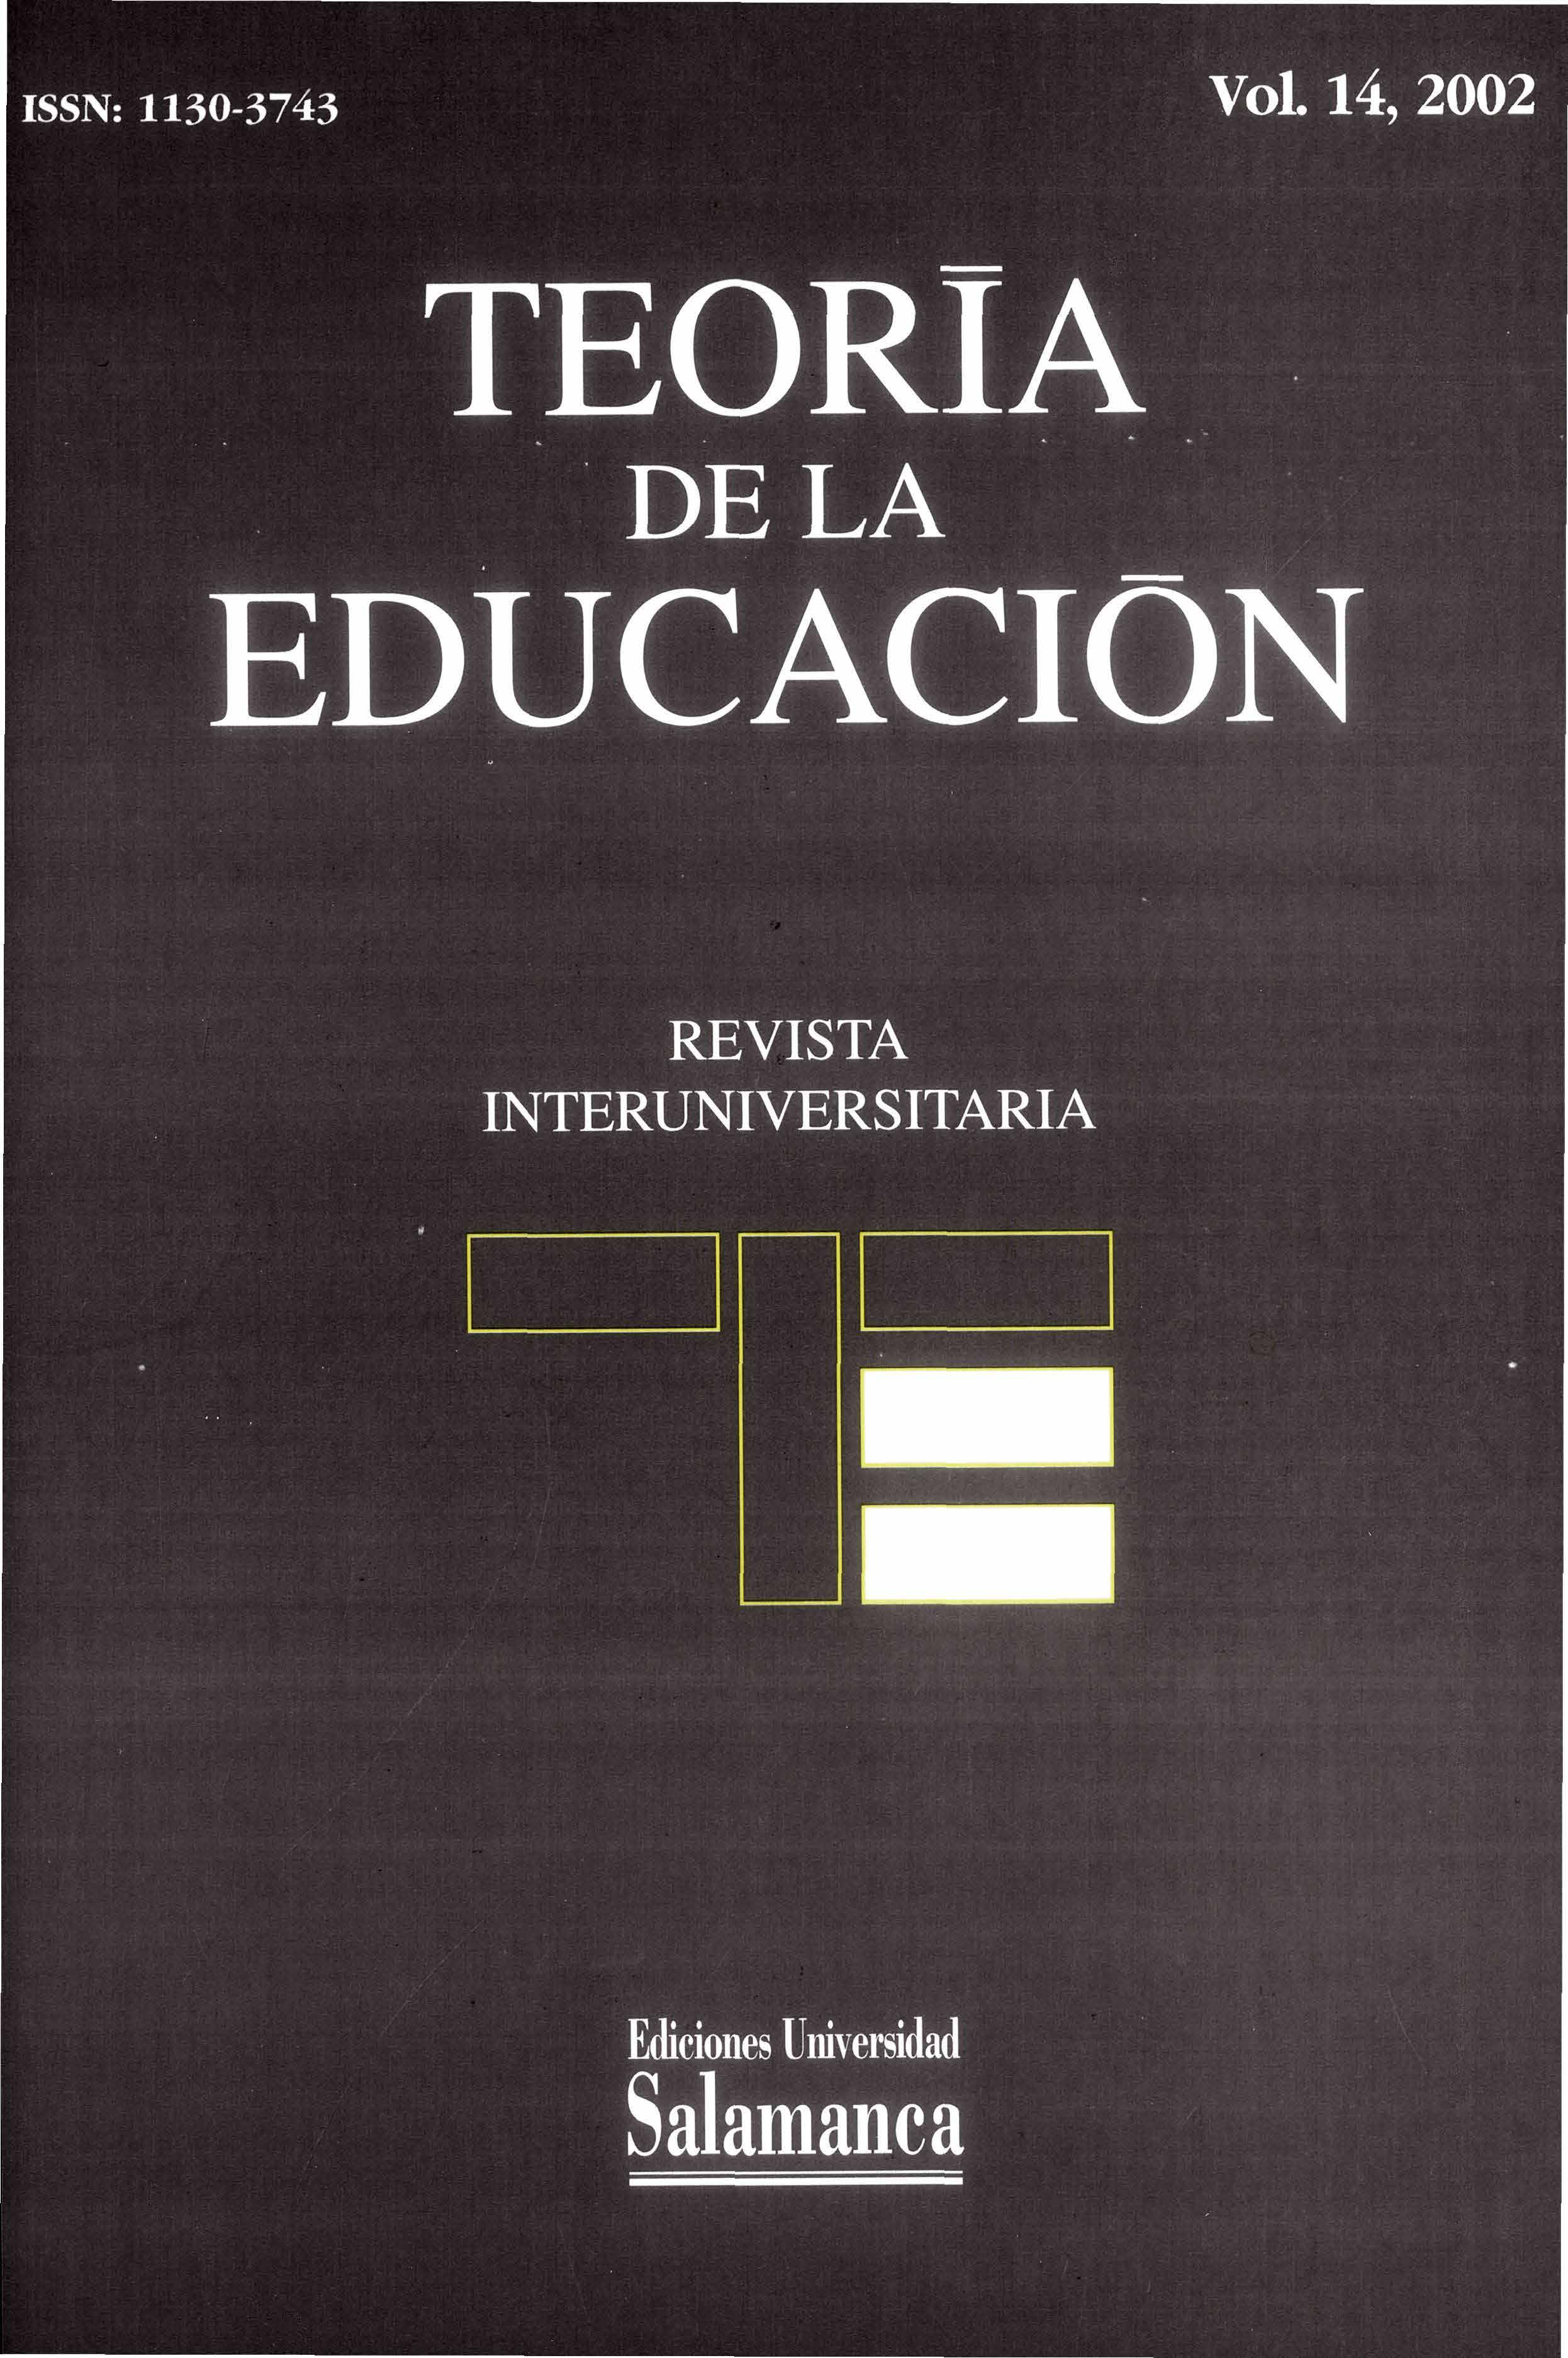                         Ver Vol. 14 (2002)
                    